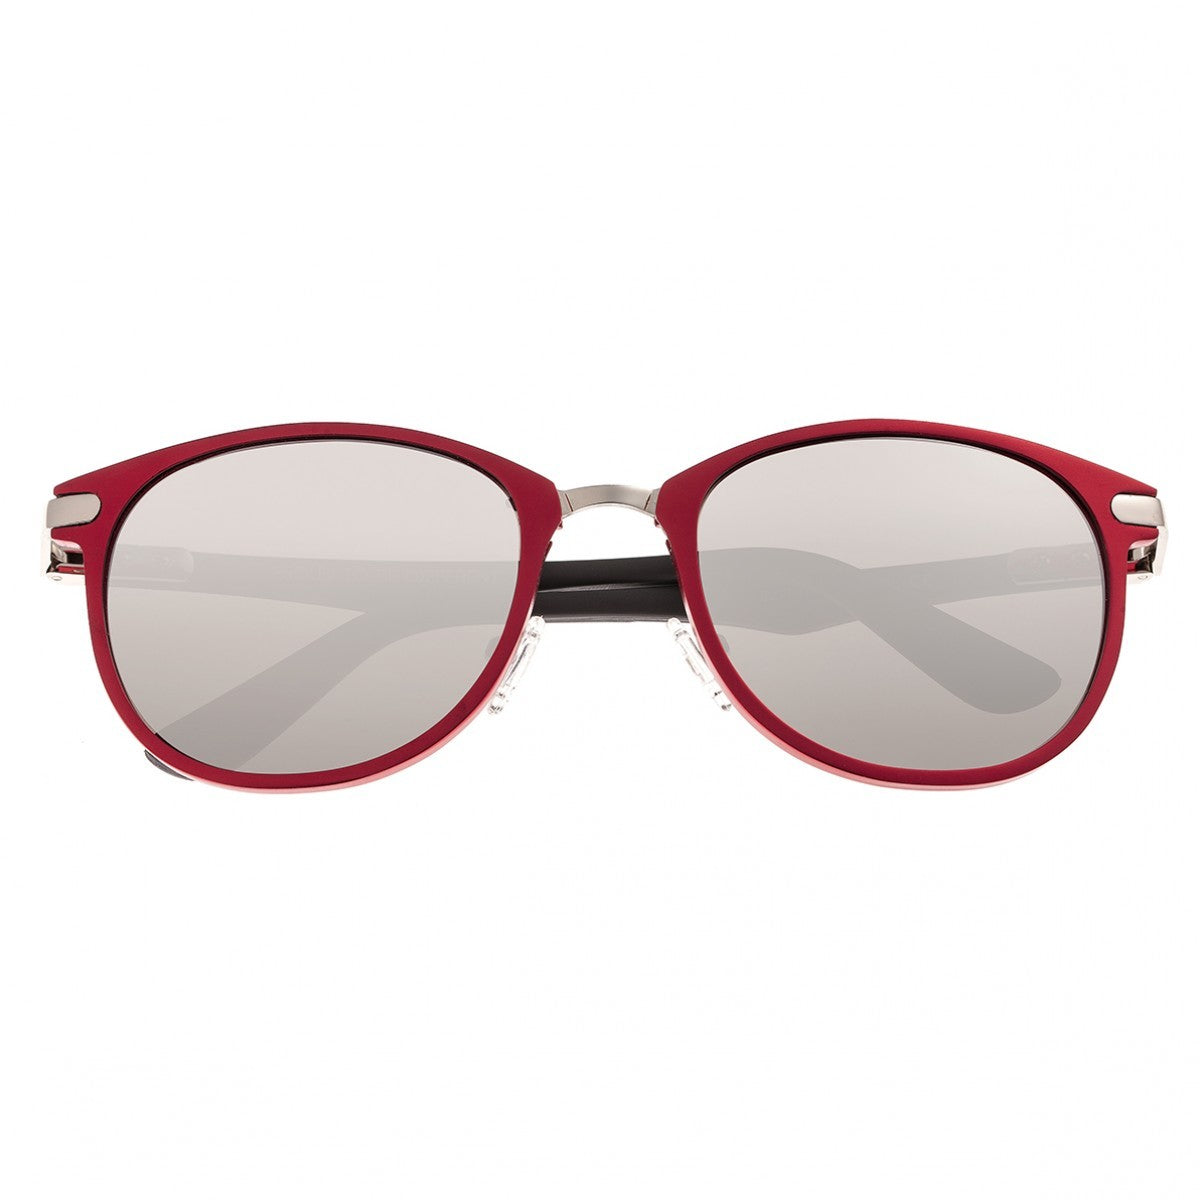 Breed Cetus Aluminium and Carbon Fiber Polarized Sunglasses - Red/Silver - BSG027RD